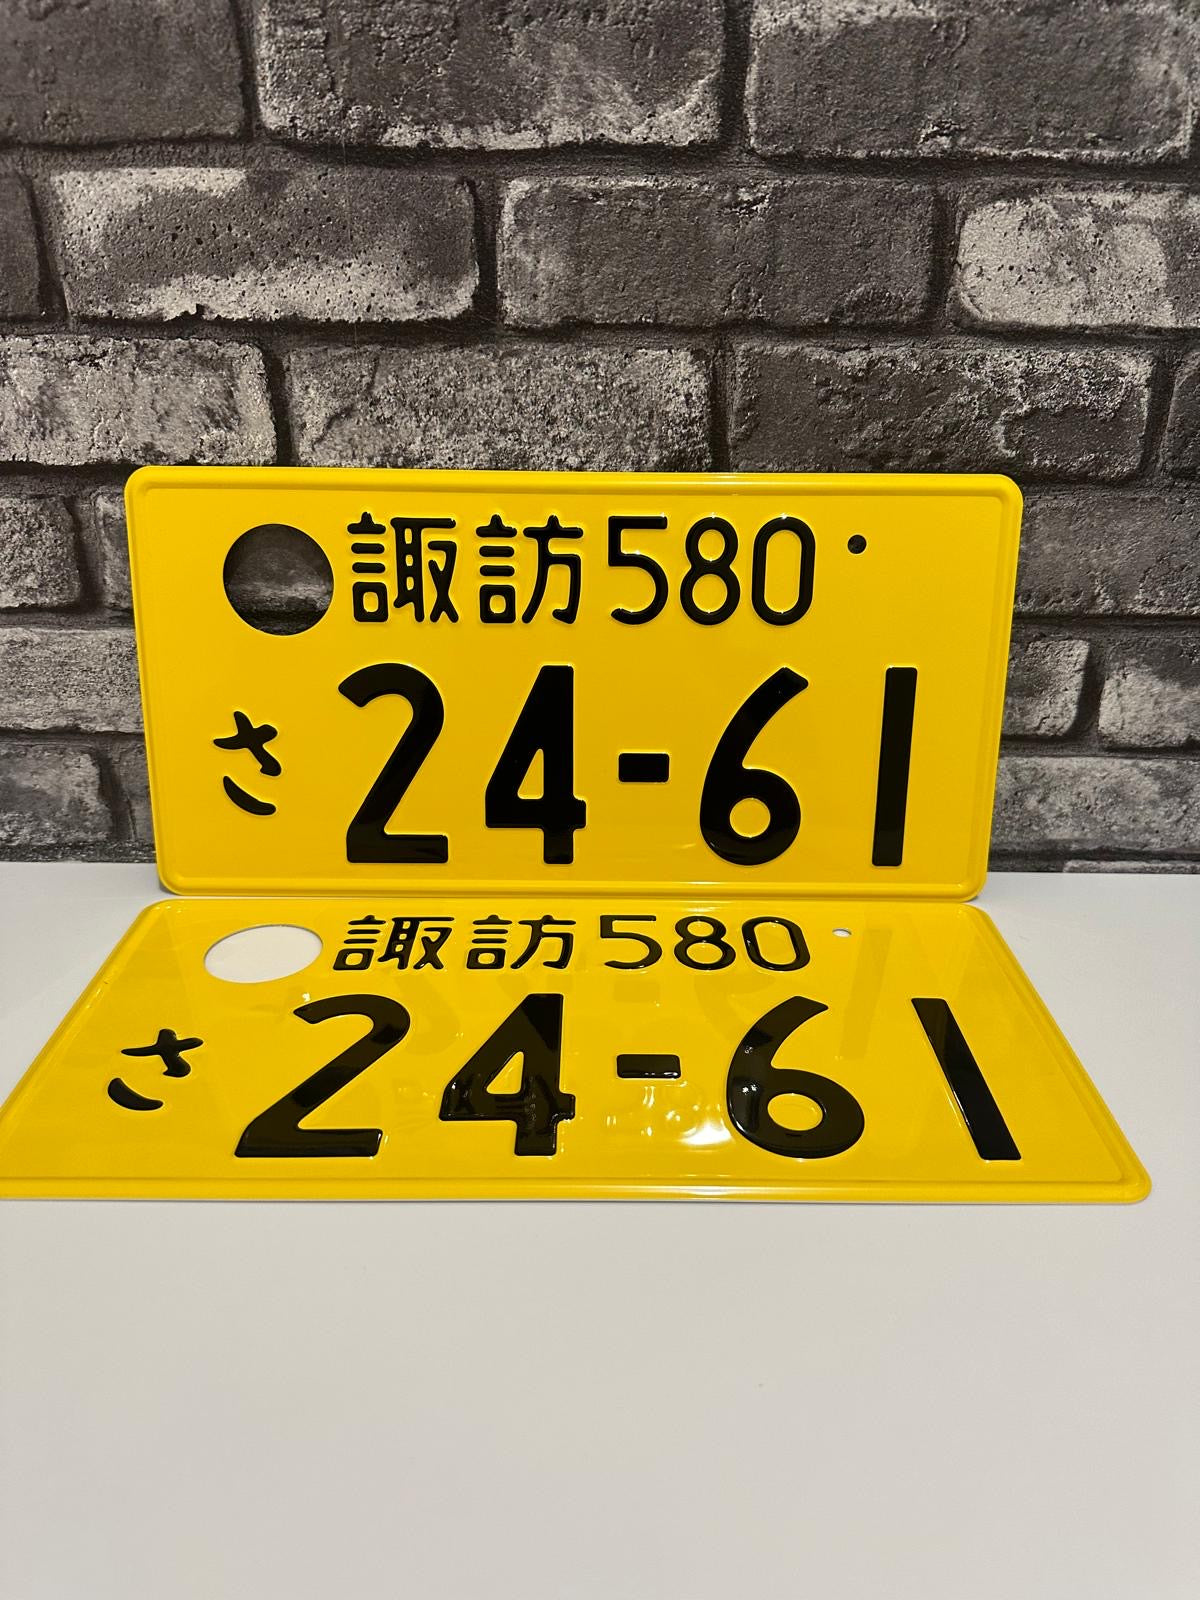 Kei 24-61 License Plate